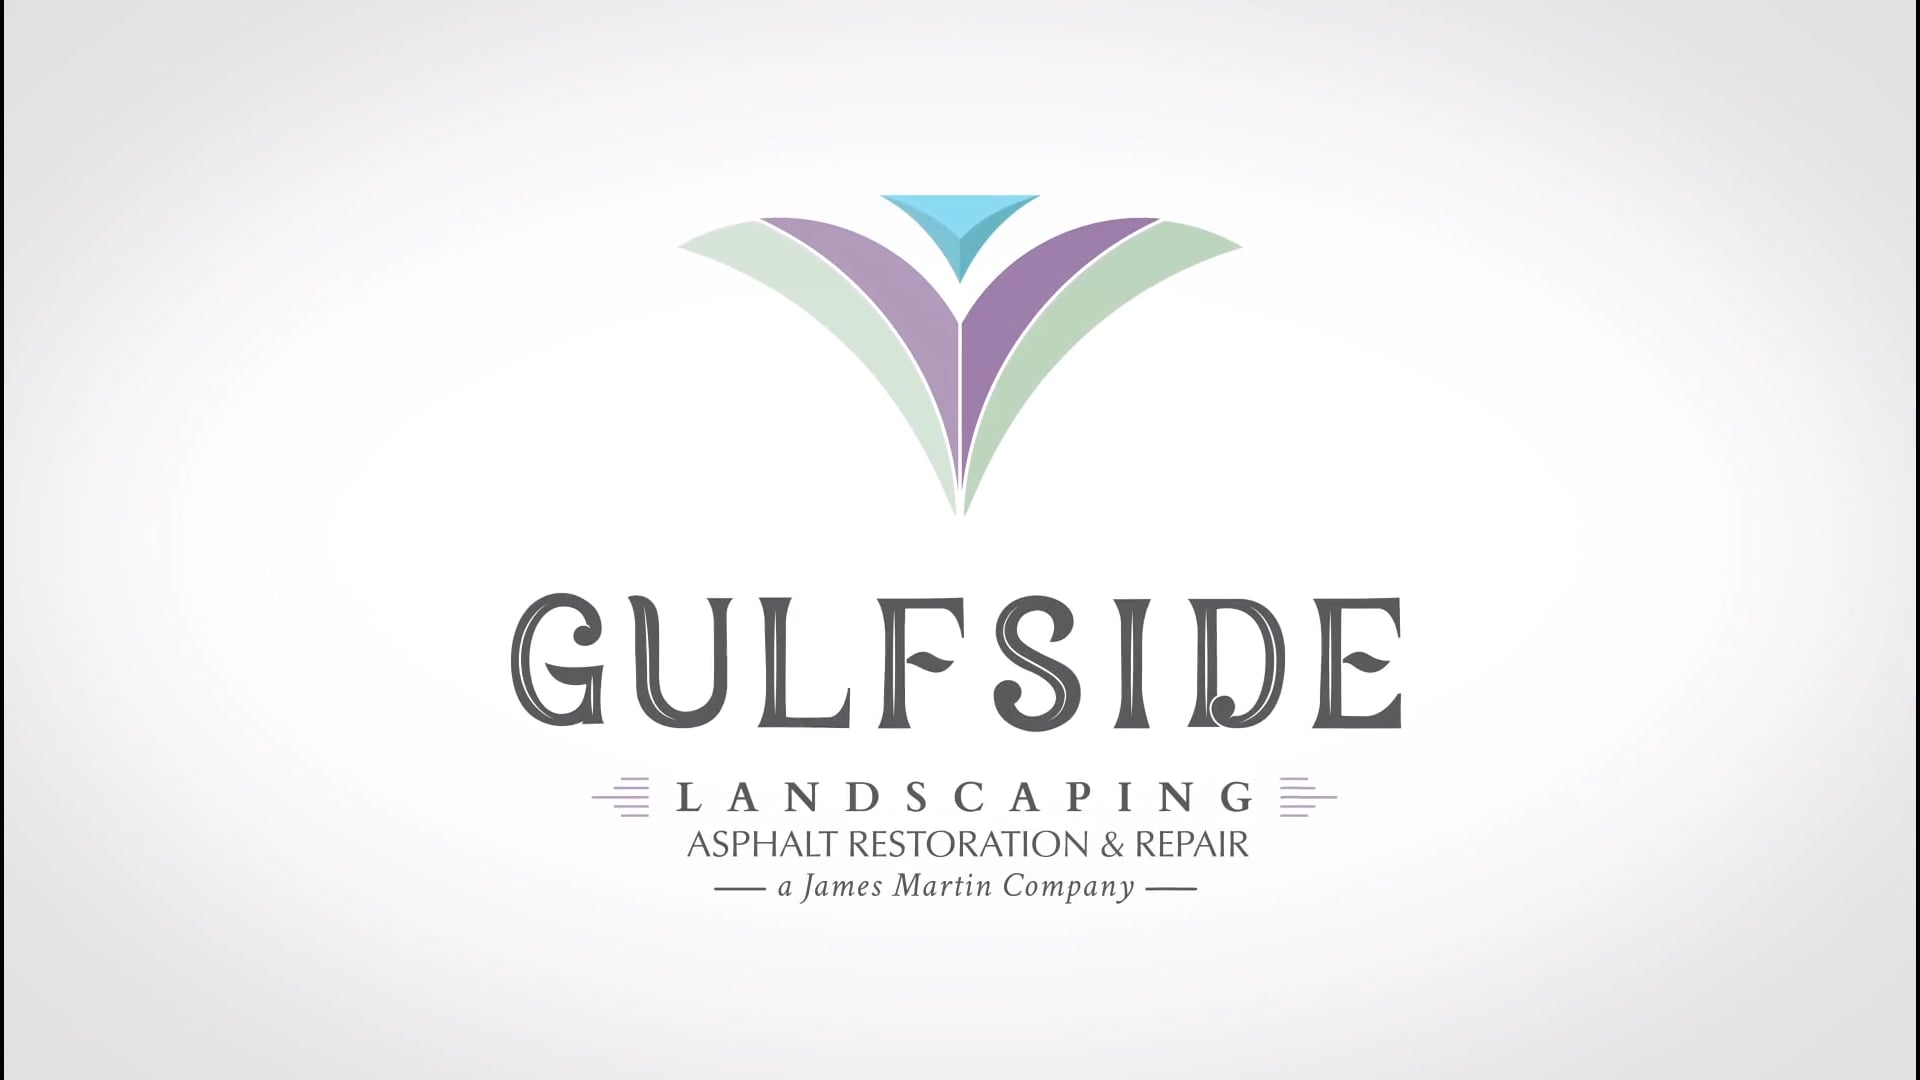 Gulfside Landscaping: Asphalt